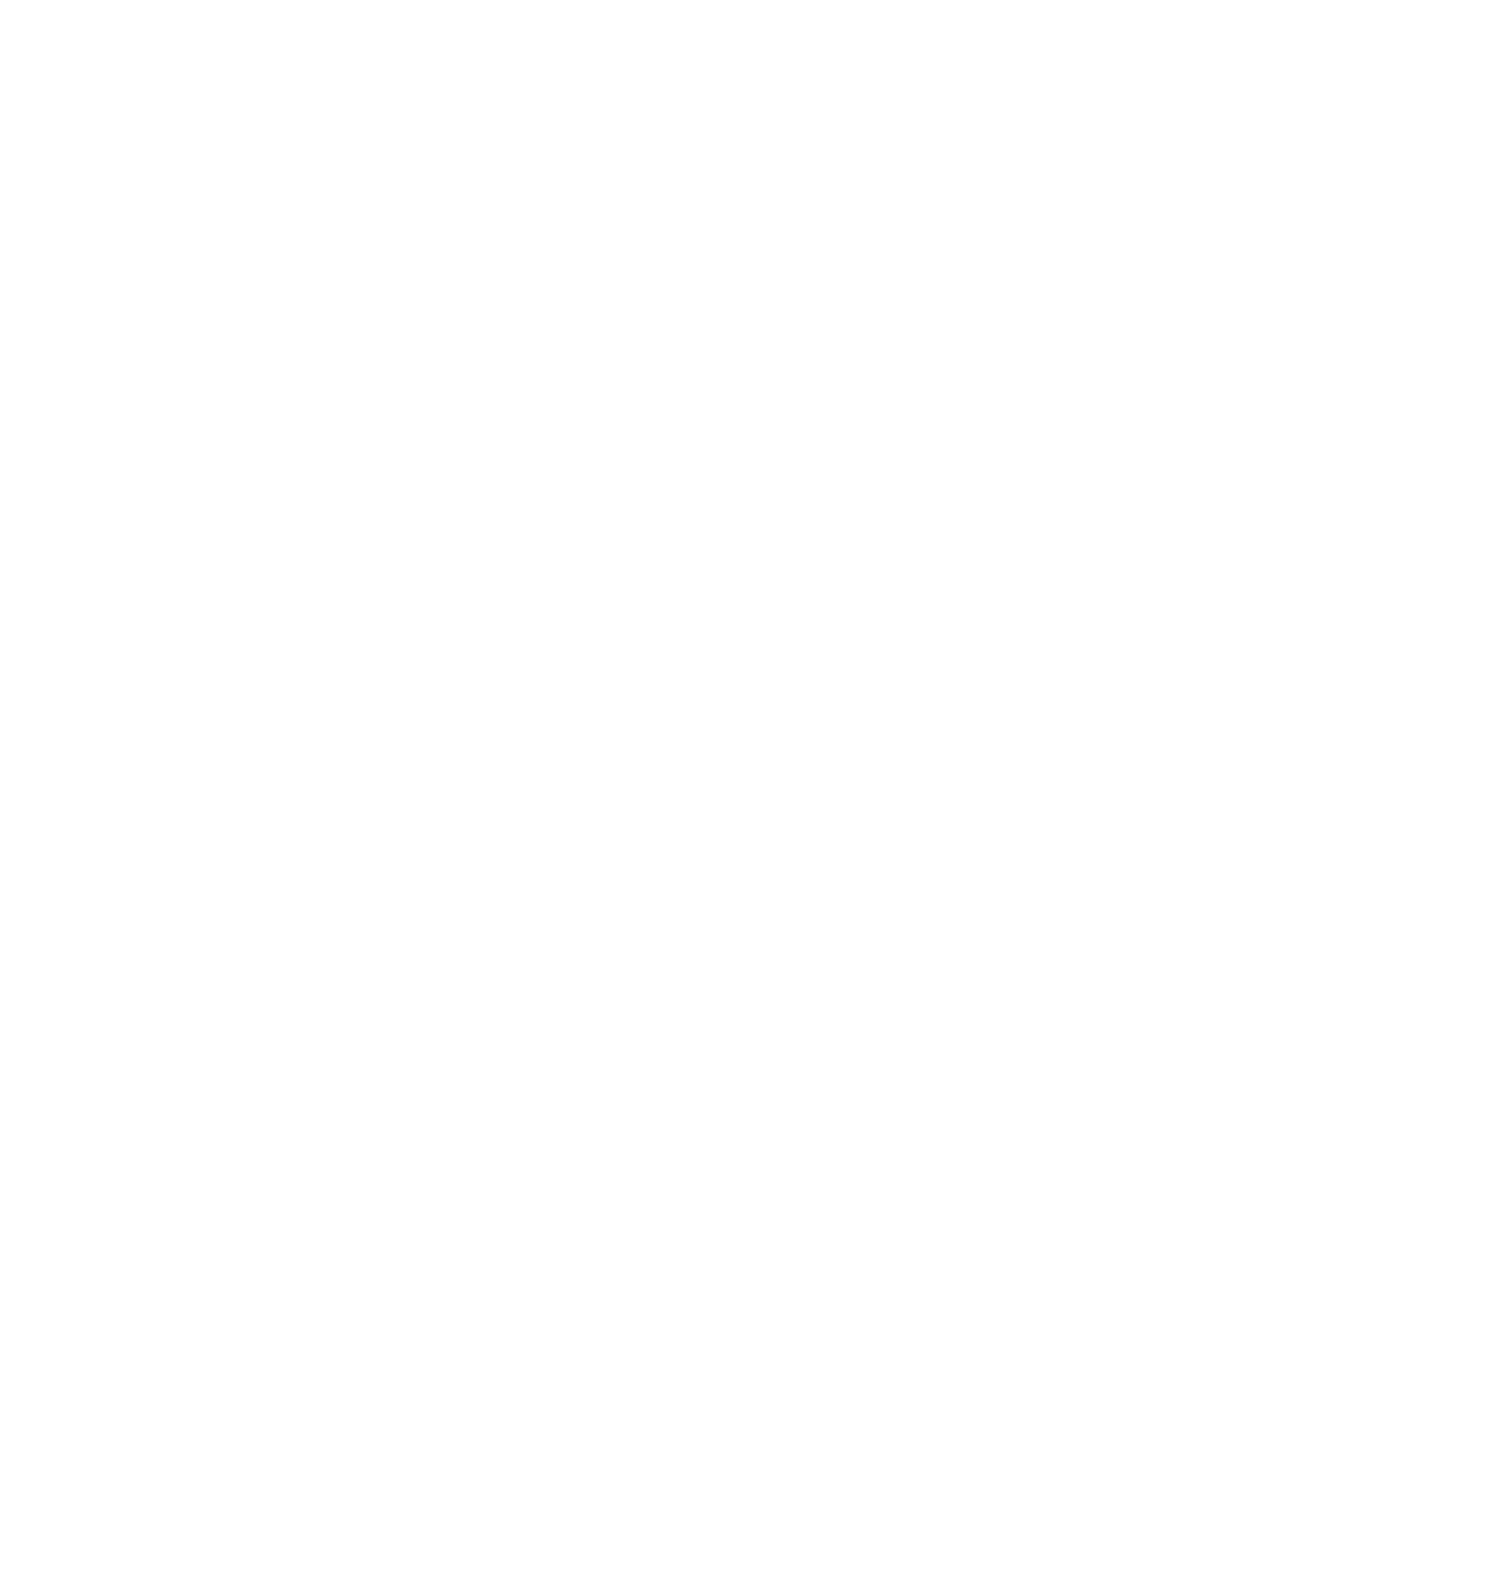 Scottish Rite Theatre